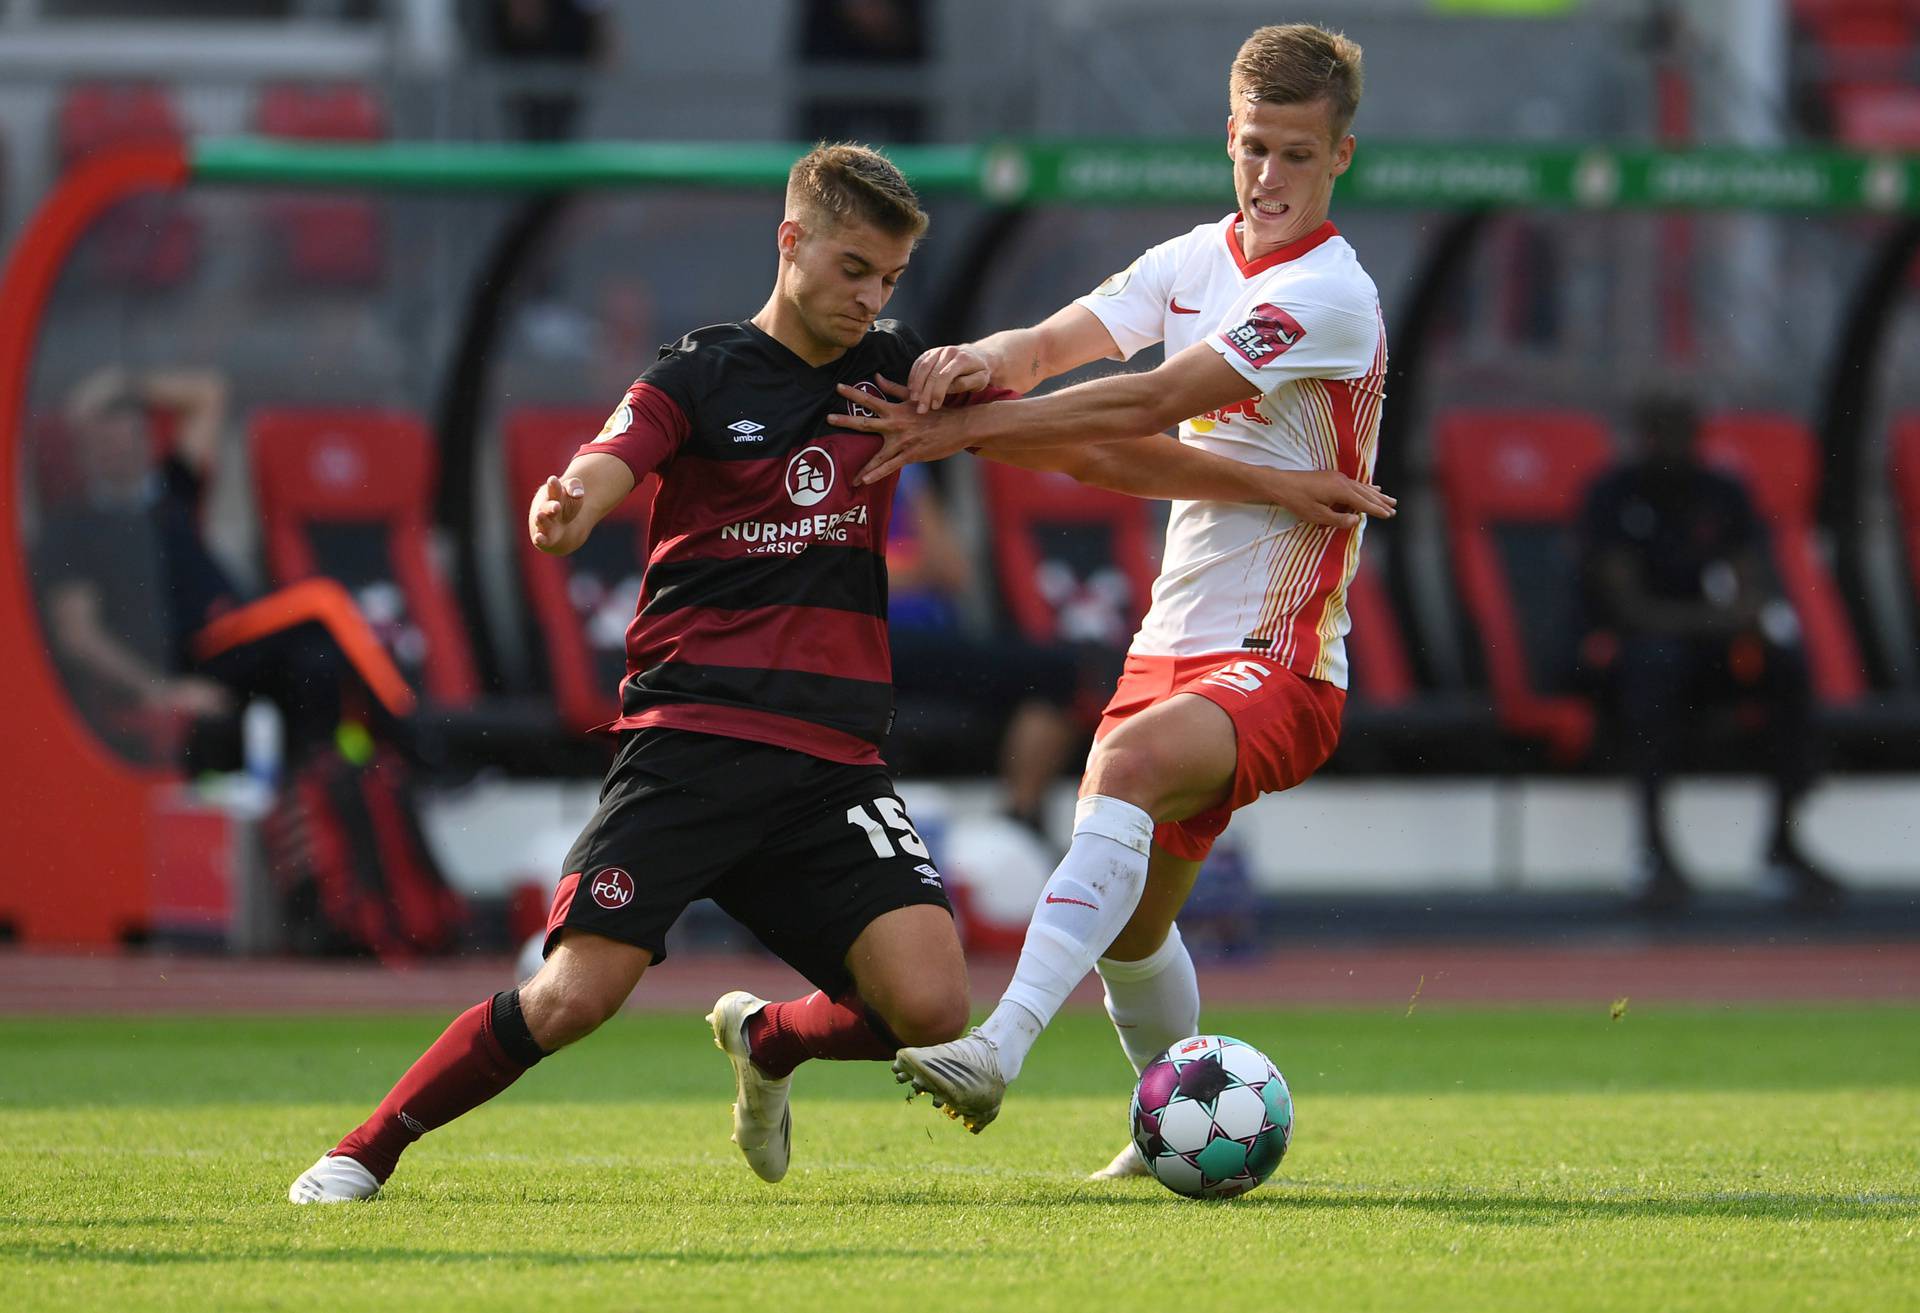 DFB Cup - First Round - 1. FC Nurnberg v RB Leipzig